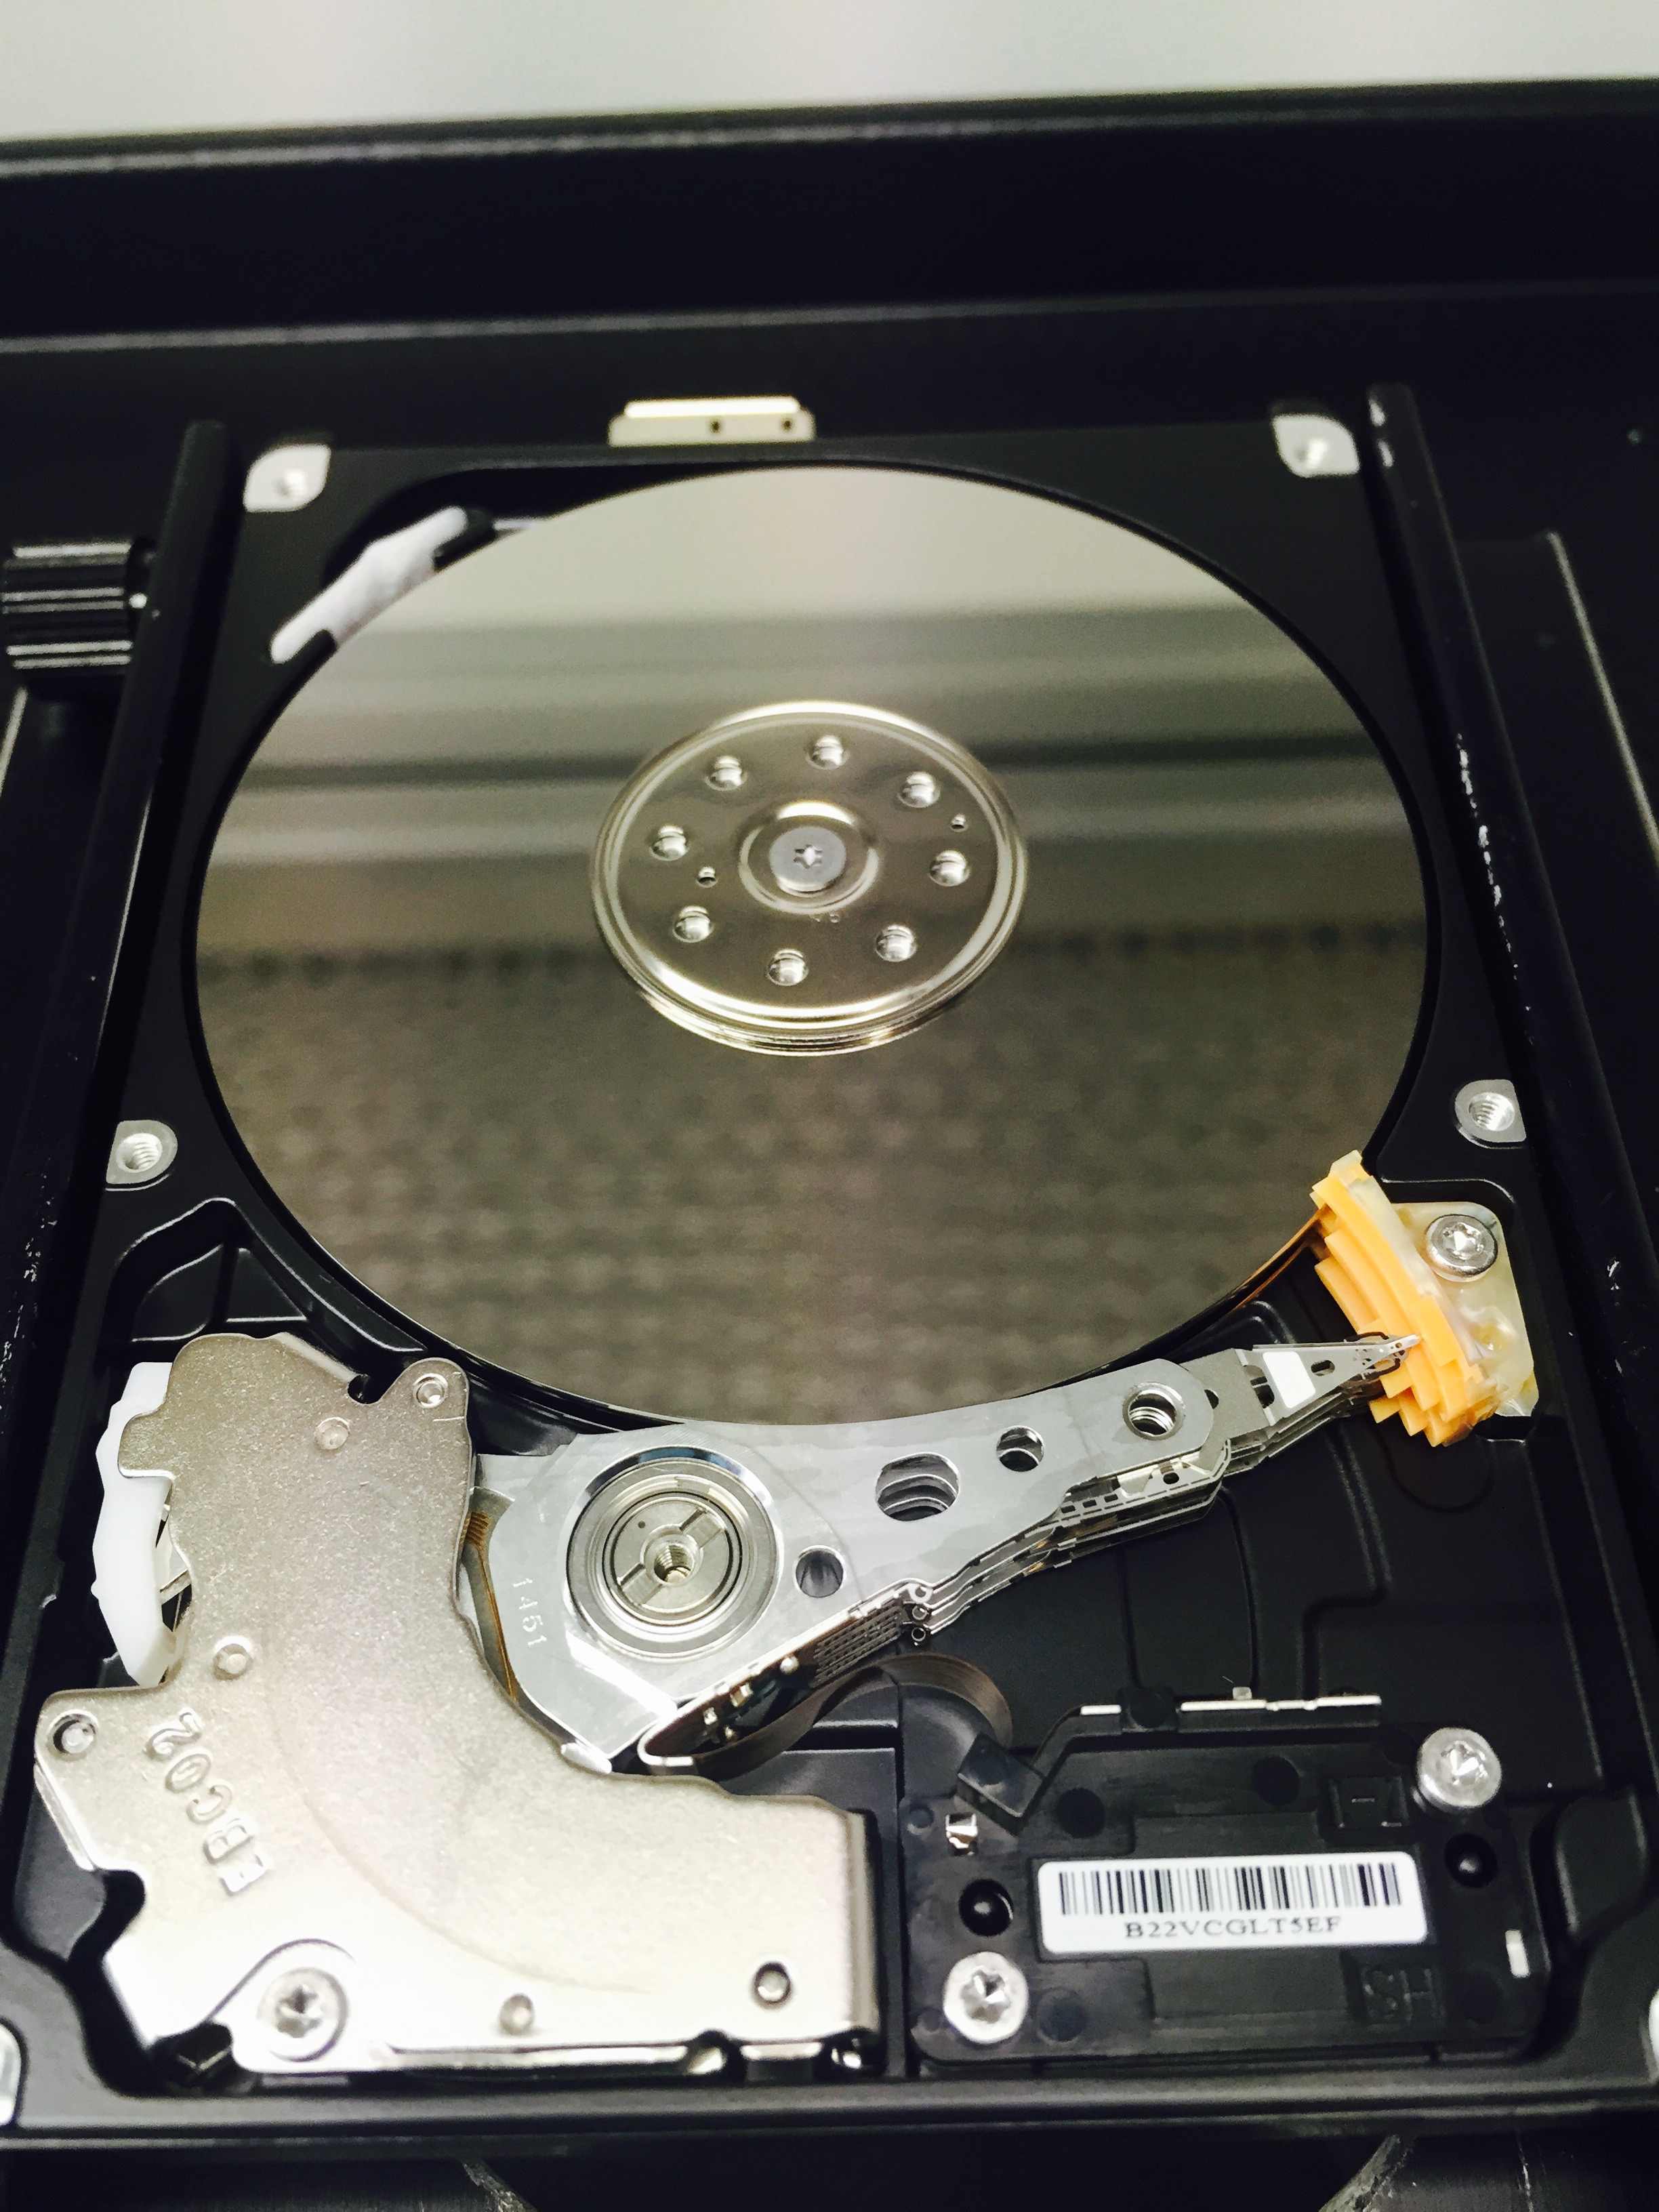 external hard drive data recovery mac hard drive beeping